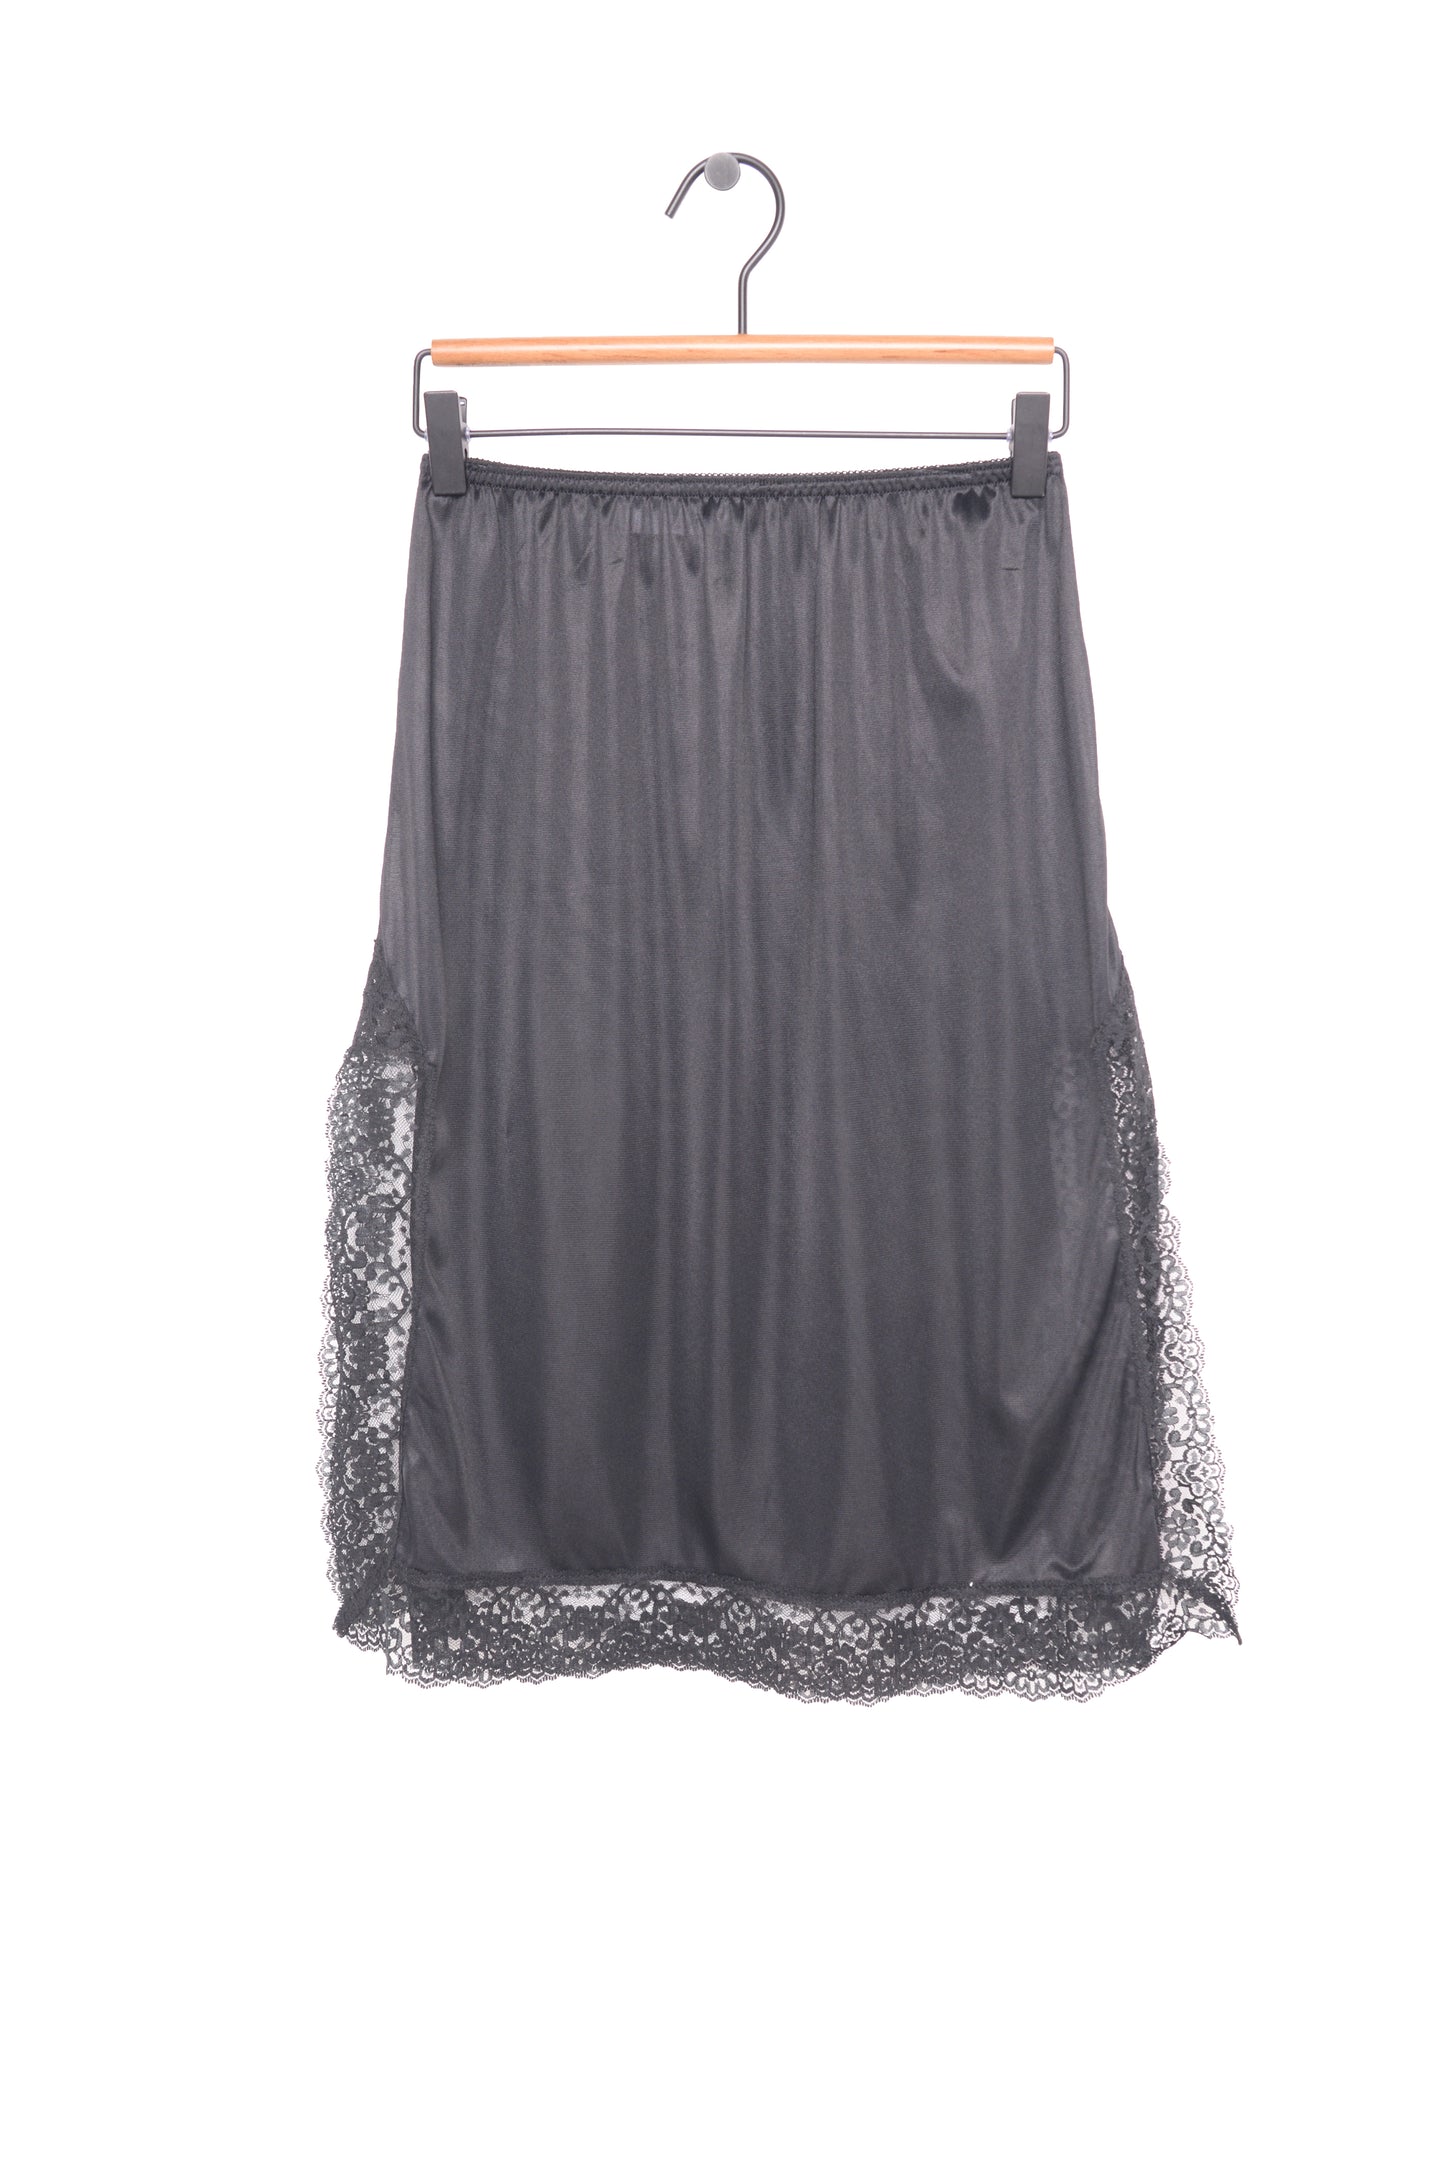 1980s Lace Trim Slip Skirt USA